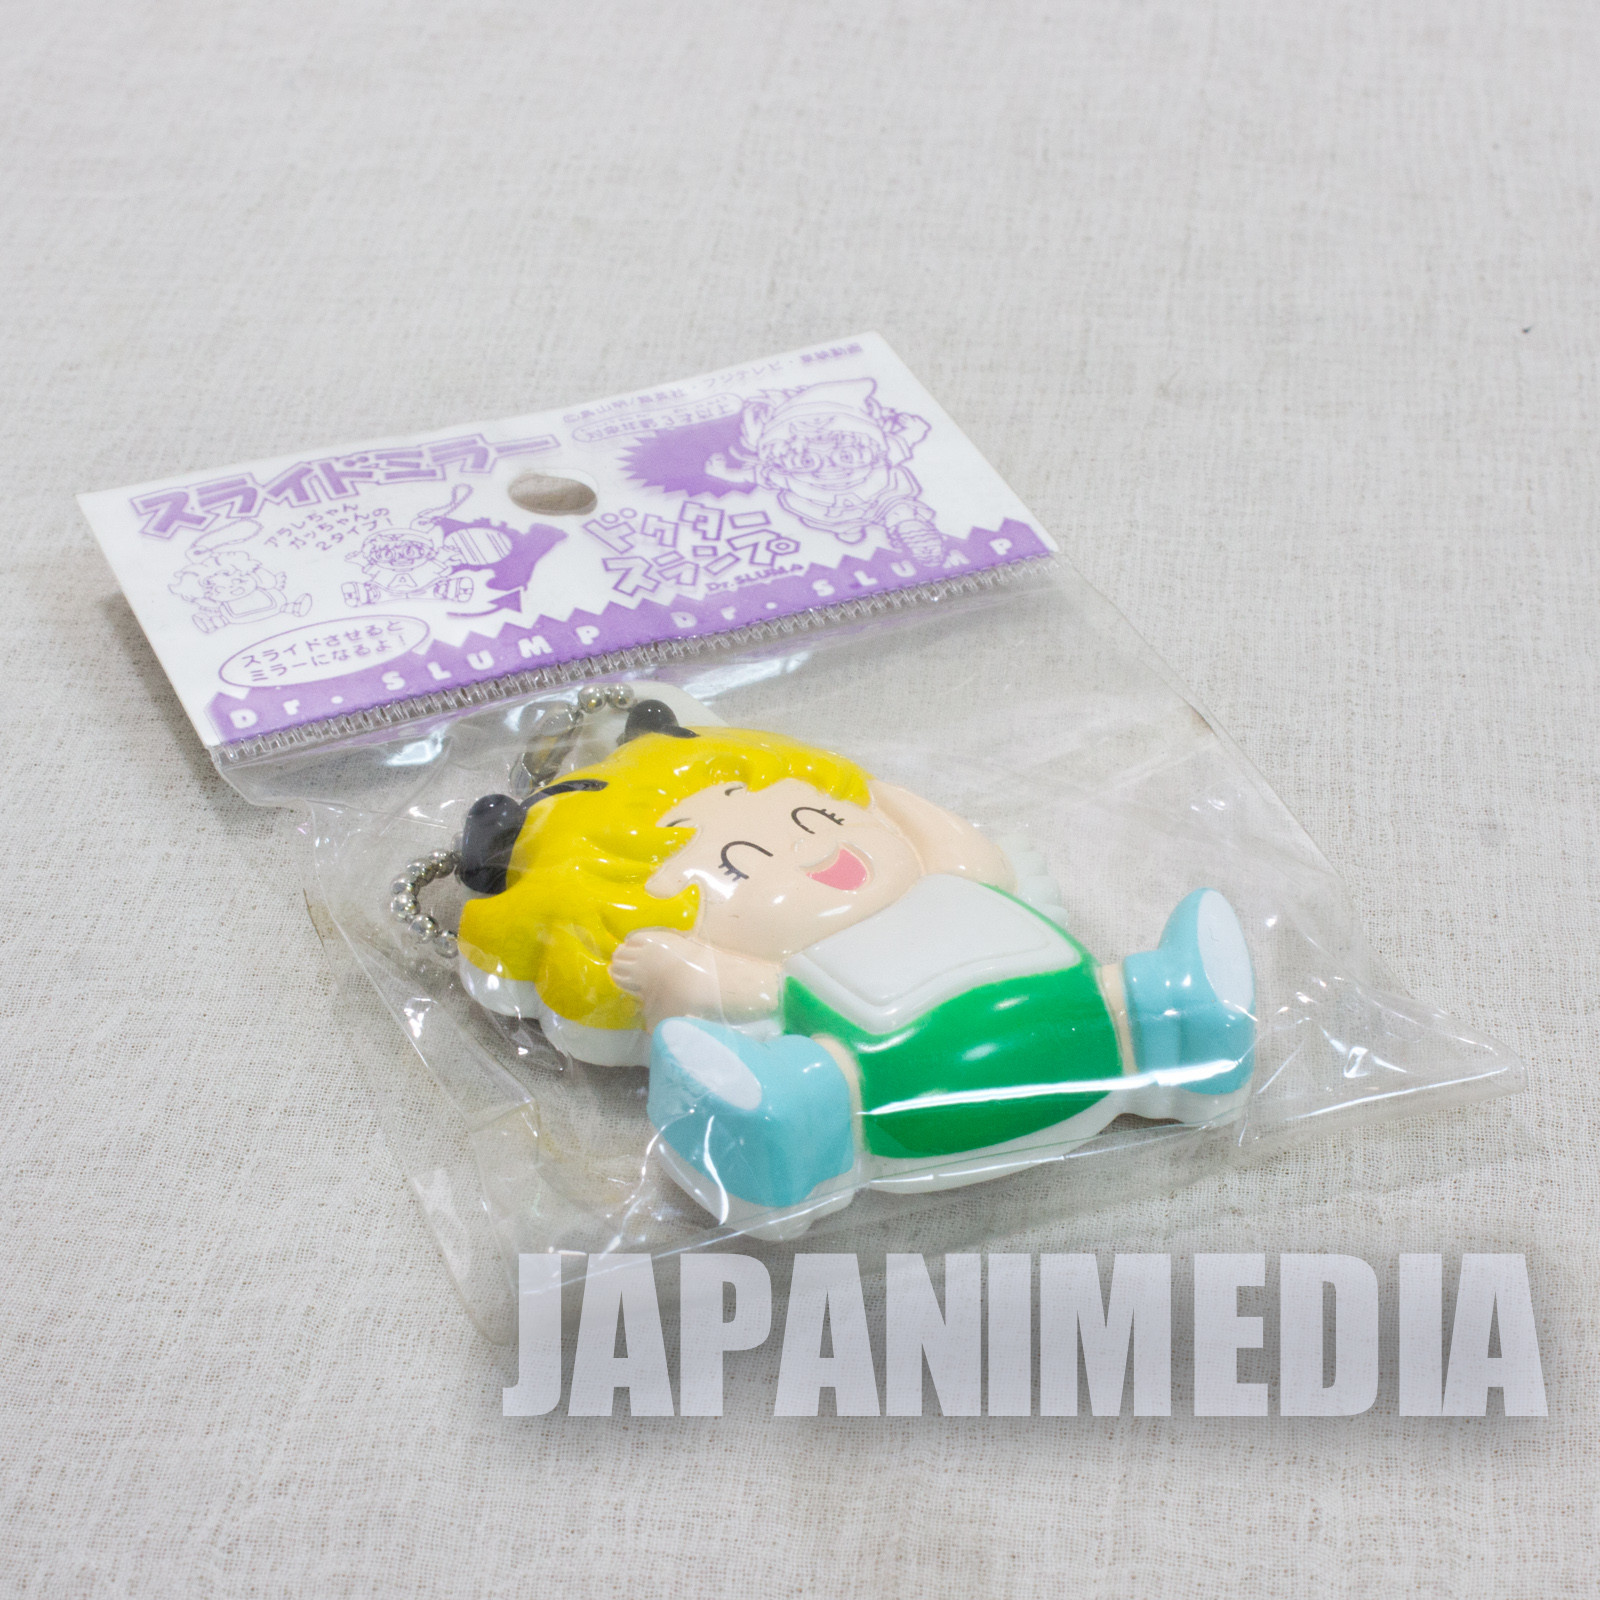 Retro Dr. Slump Arale chan Gatchan Mascot Slide Mirror JAPAN ANIME MANGA